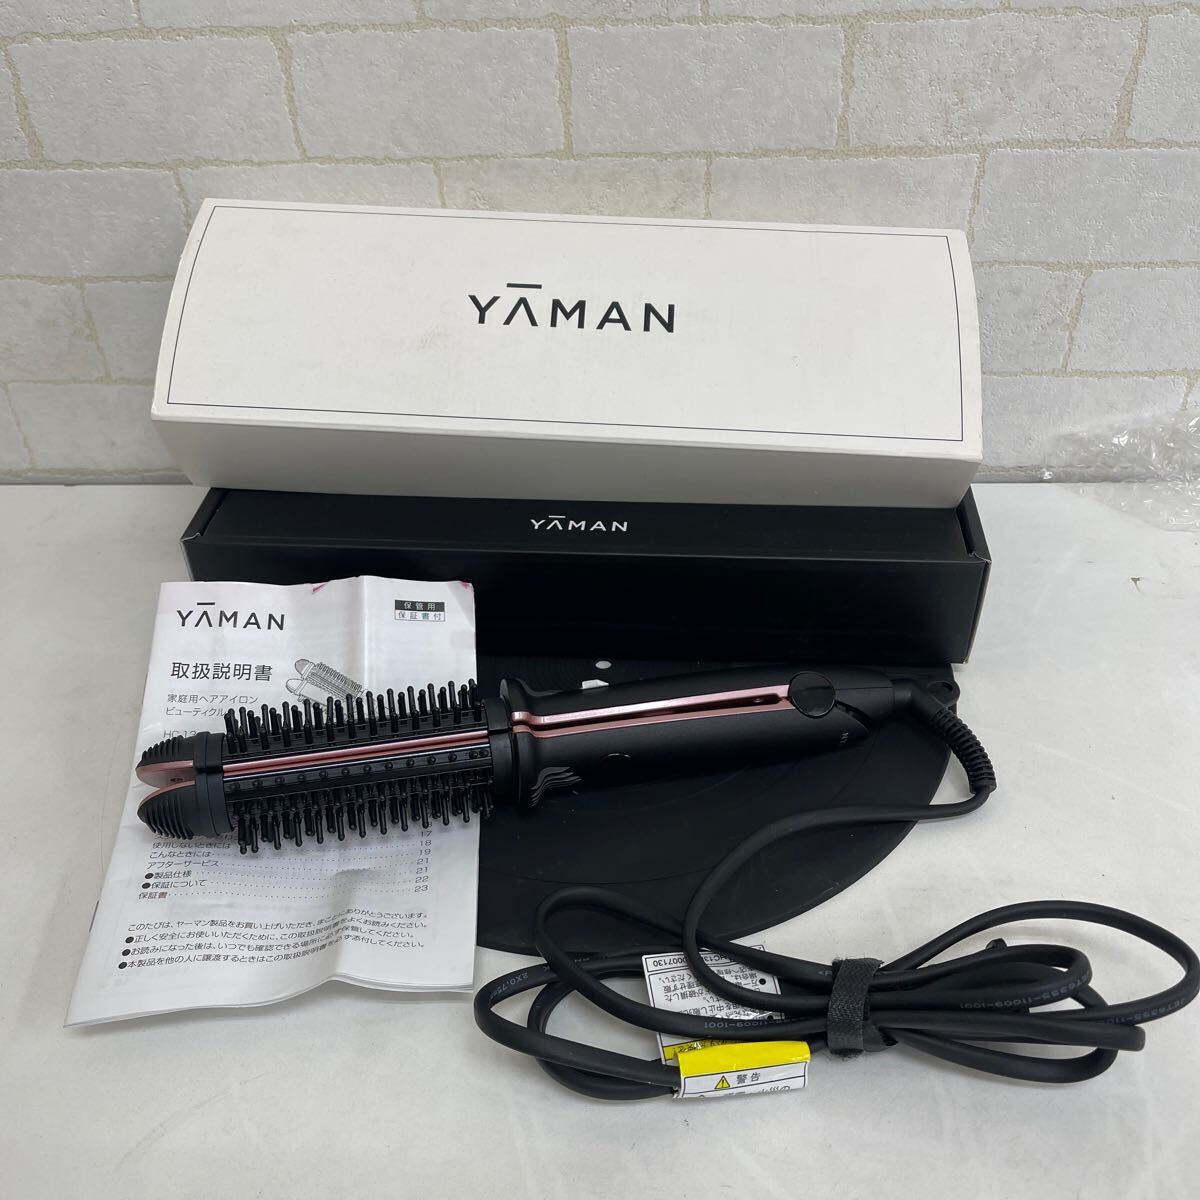 Y324. 5. Ya-Man YA-MAN вид tikruHC-13B распрямляющие щипцы для волос электризация проверка settled 